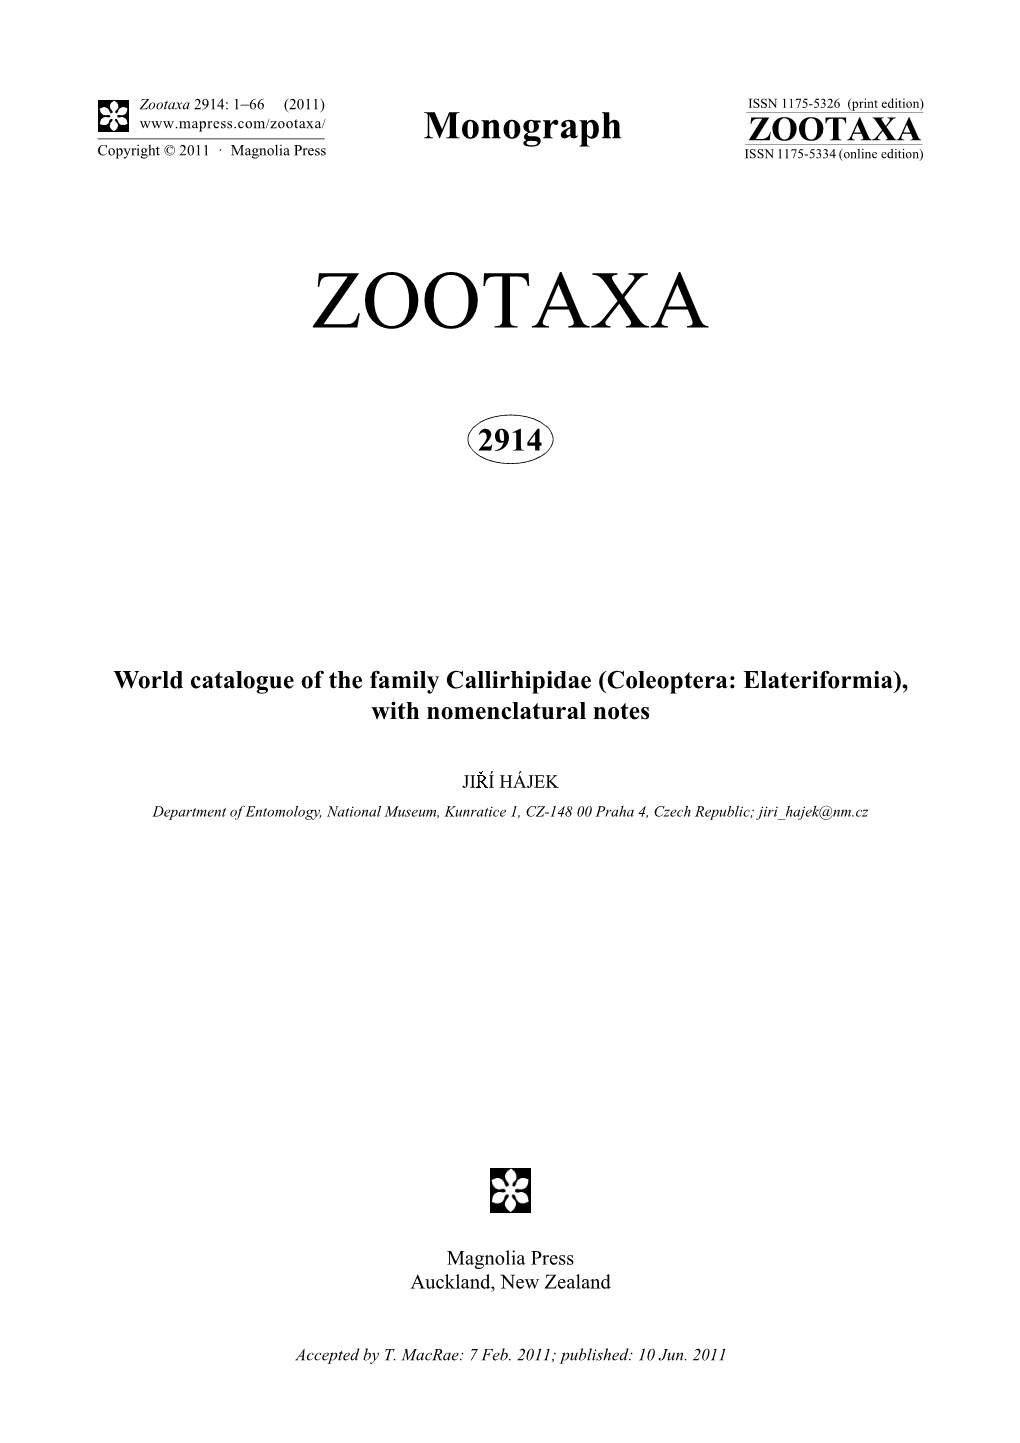 World Catalogue of the Family Callirhipidae (Coleoptera: Elateriformia), with Nomenclatural Notes